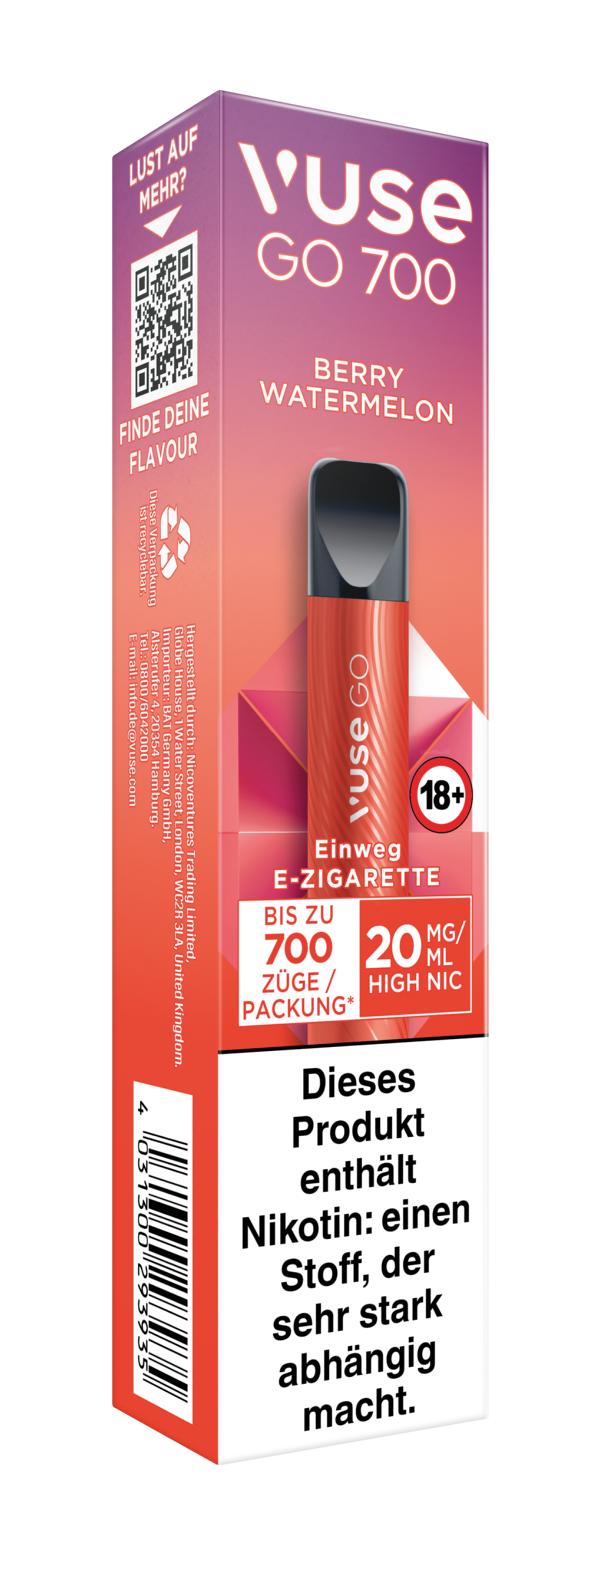 Vuse Go 700 Einweg E-Zigarette Berry Watermelon 20mg/ml Nikotin